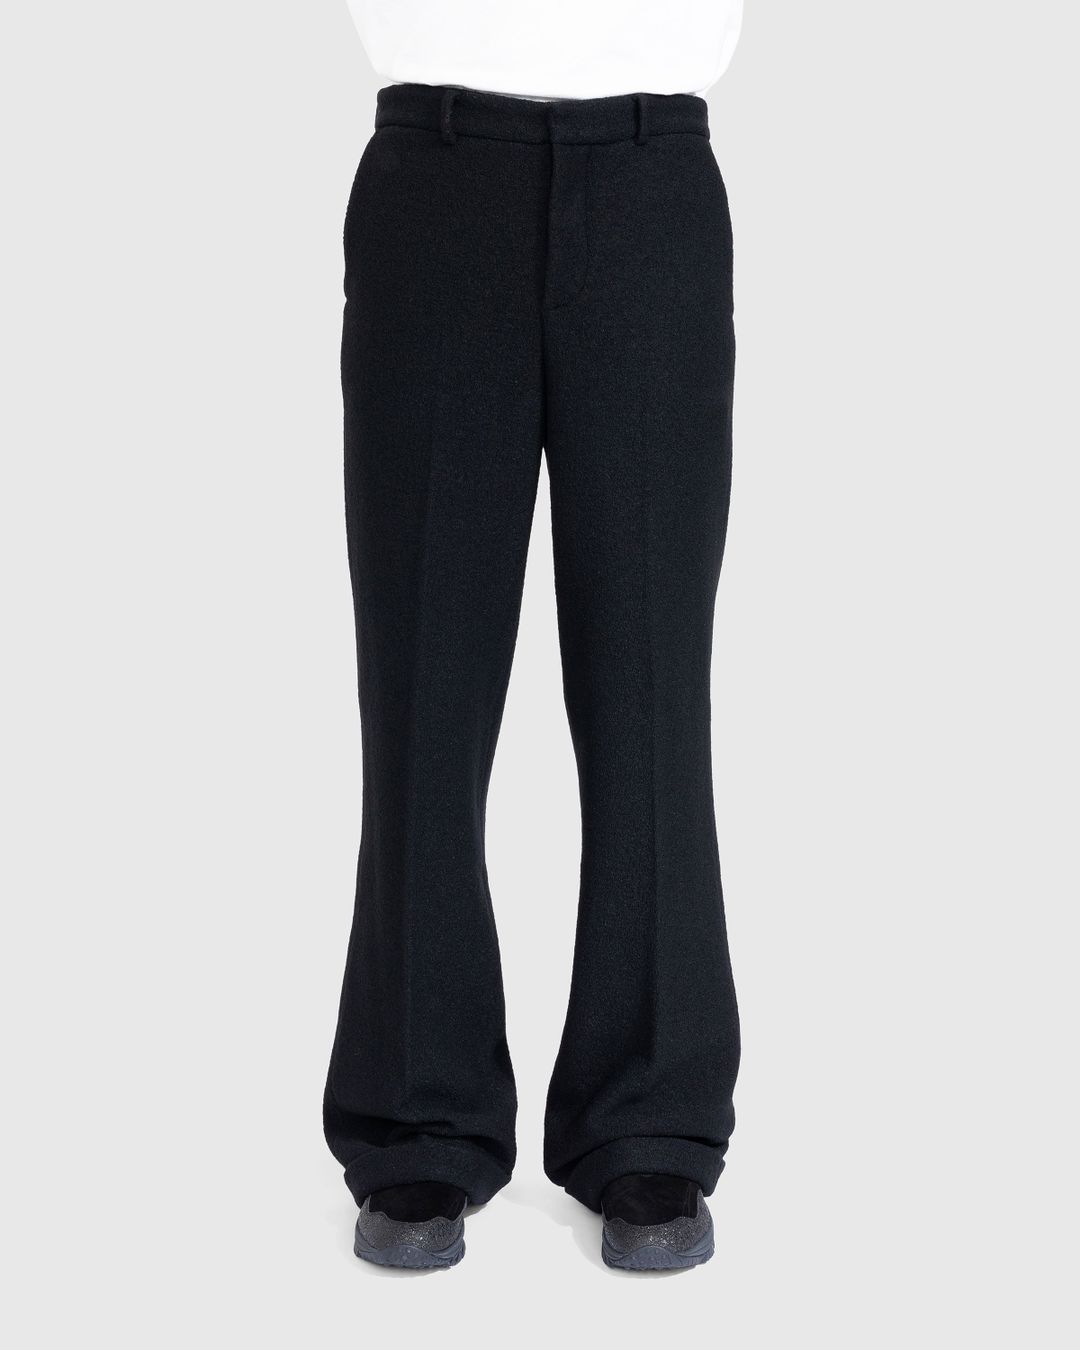 Trussardi – Boucle Jersey Trousers Black | Highsnobiety Shop